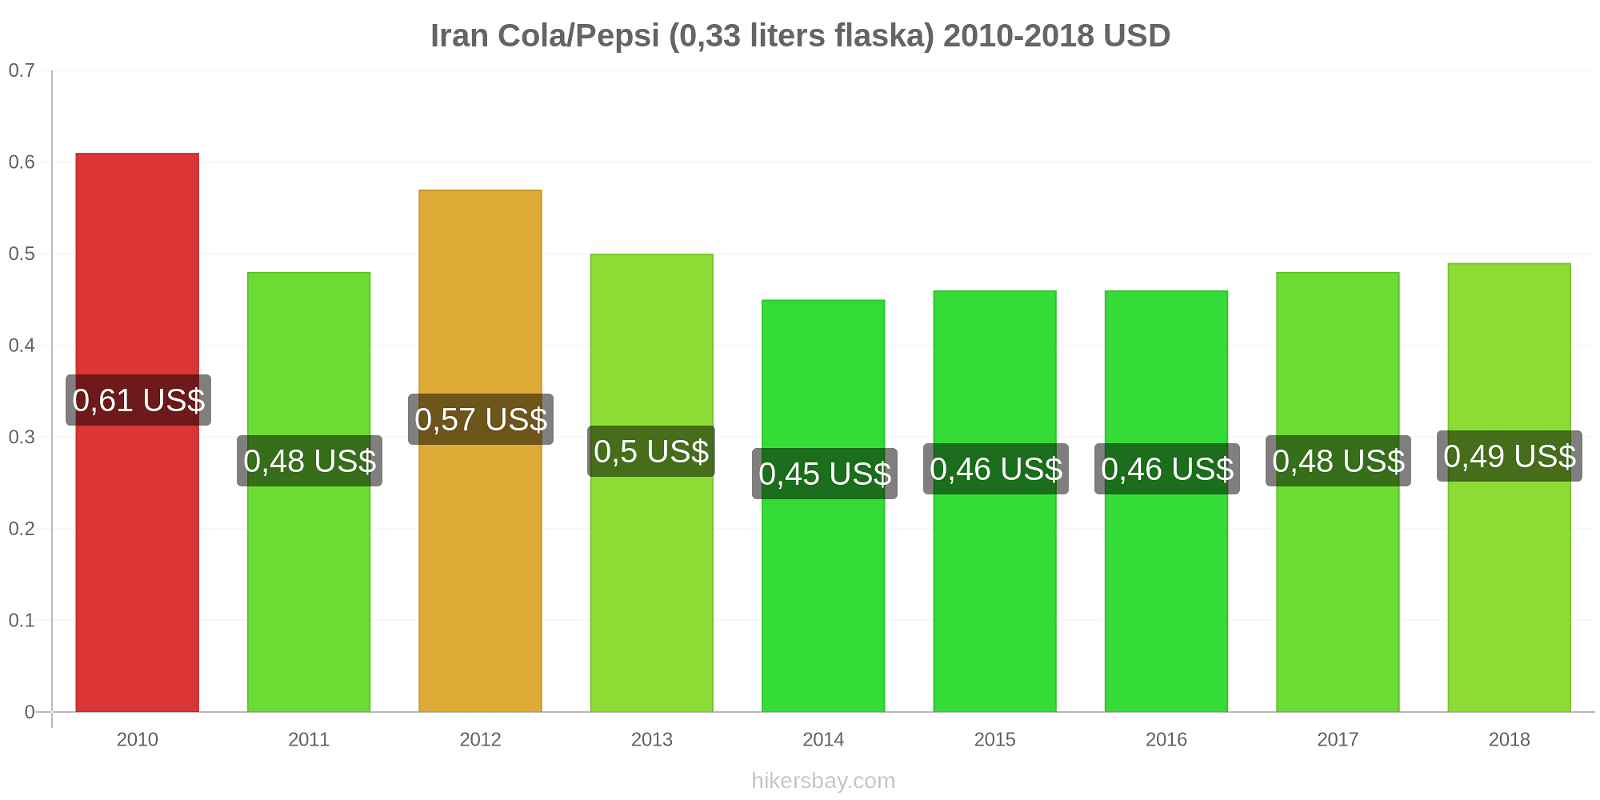 Iran prisändringar Coca-Cola/Pepsi (0.33 liters flaska) hikersbay.com